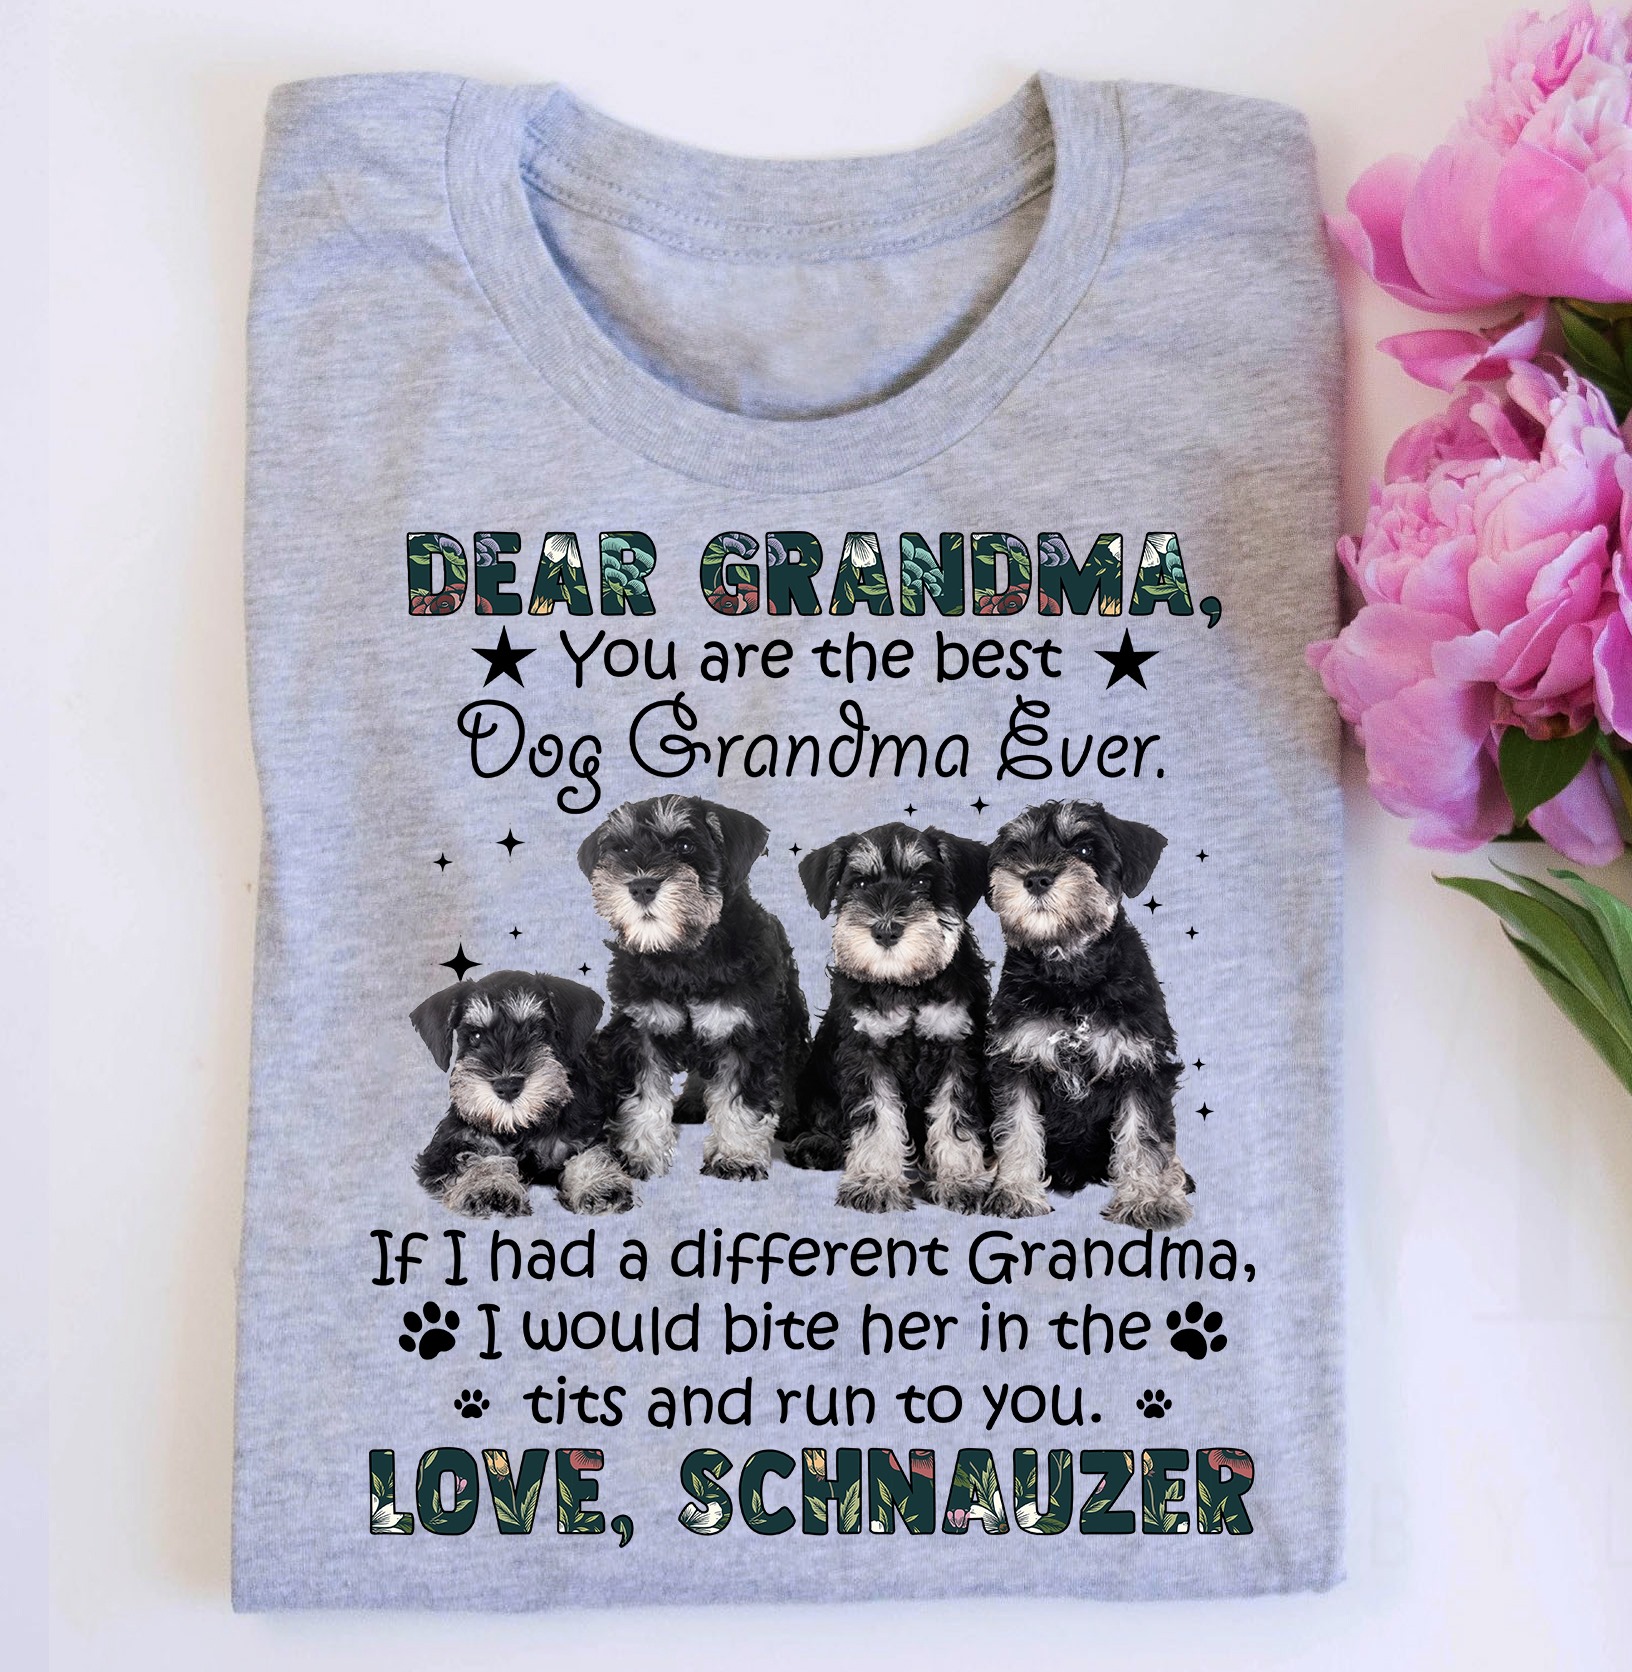 Dear grandma, you are the best dog grandma ever - Schnauzer dog, dog grandma